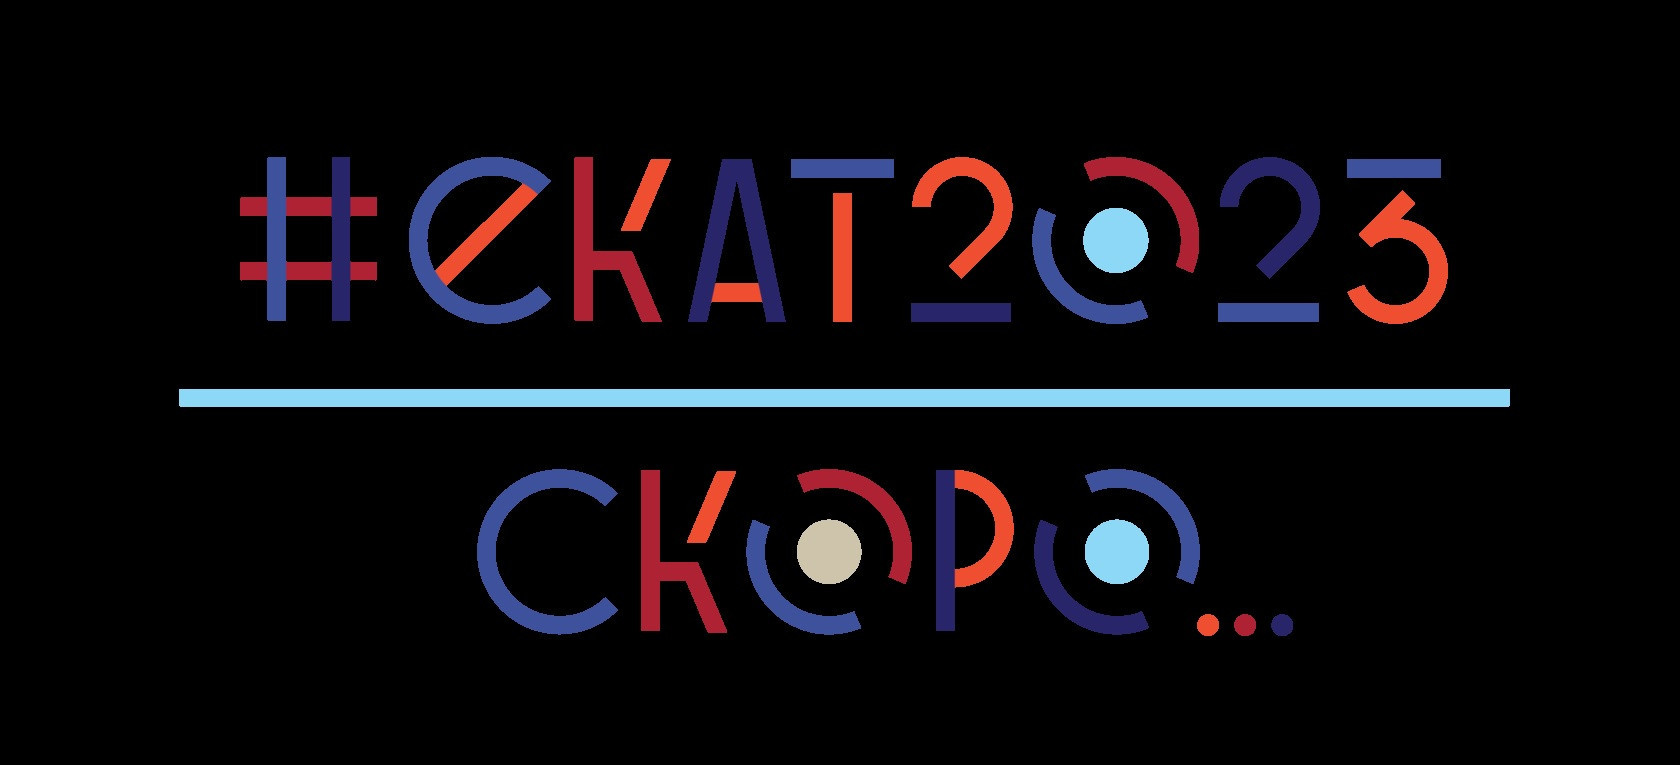 Logo and mascots chosen for Yekaterinburg 2023